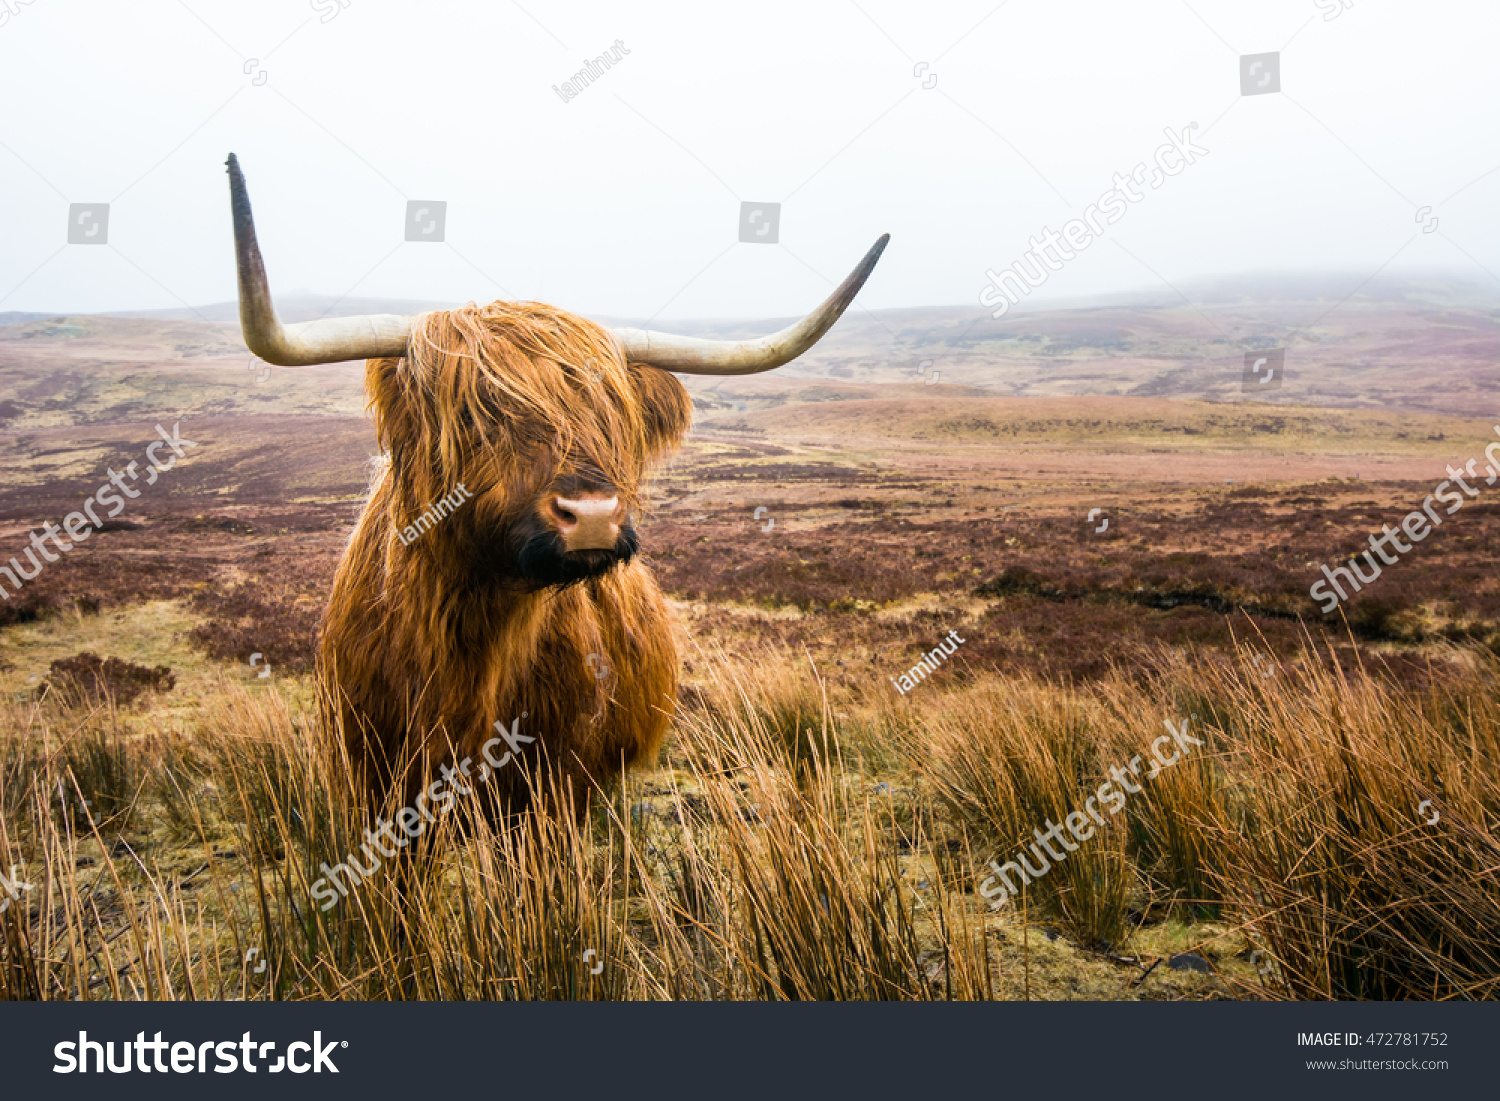 stock-photo-scottish-highland-cow-in-field-highland-cattle-scotland-472781752.jpg